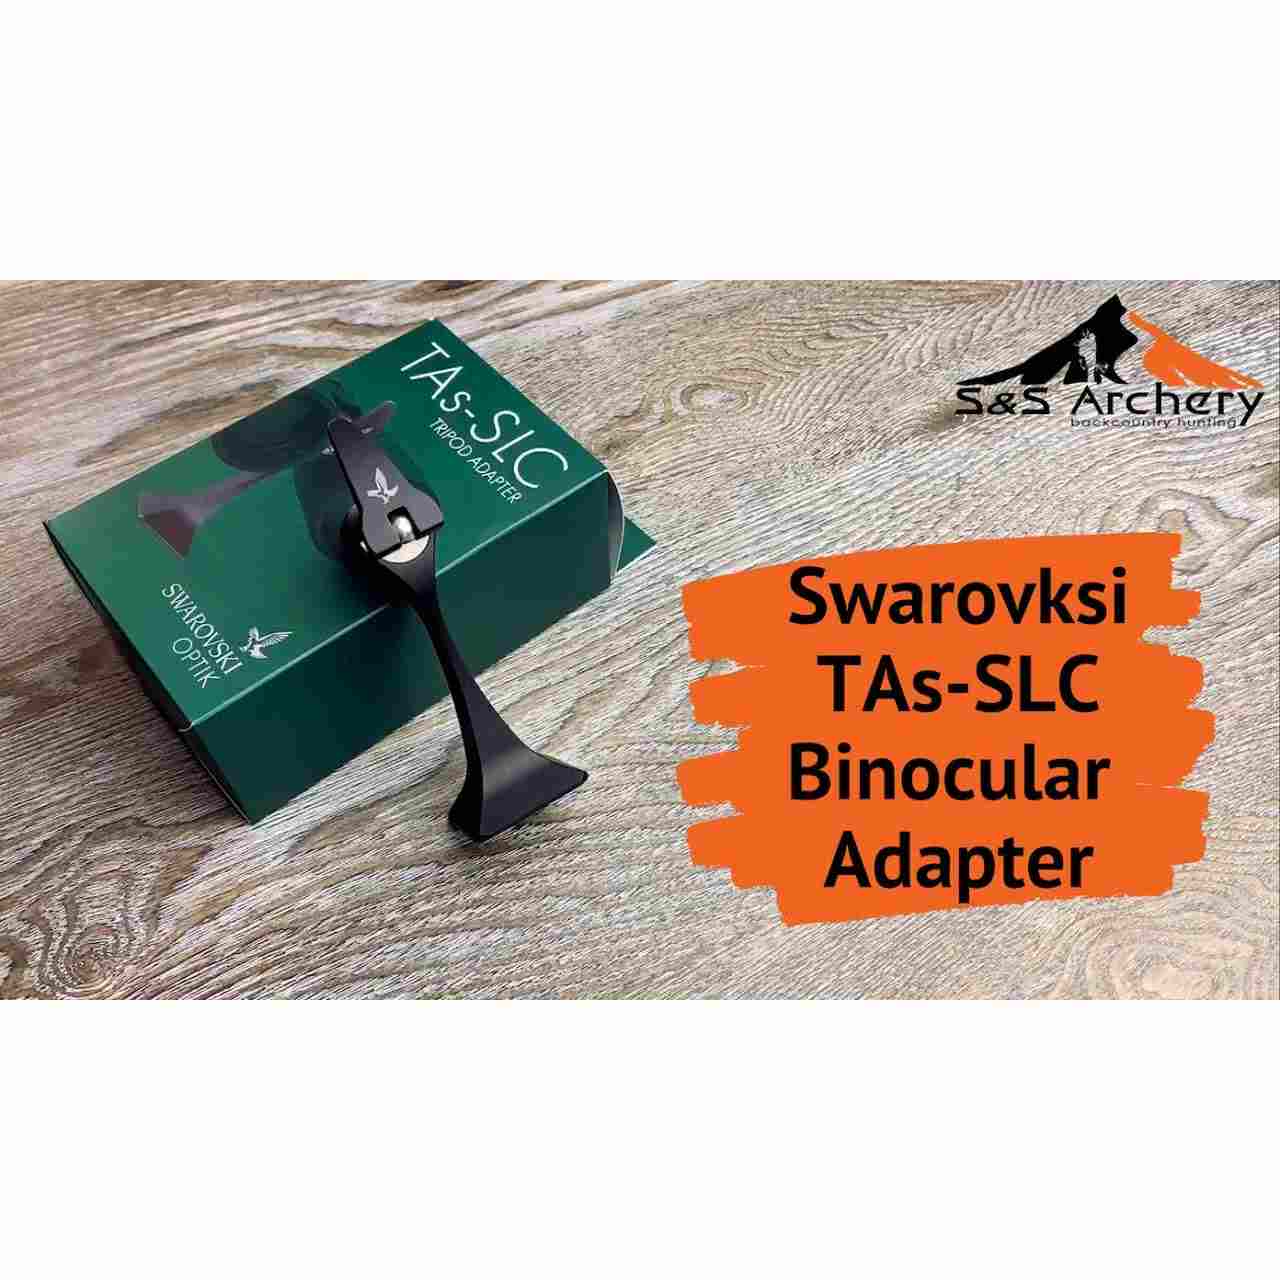 Swarovski TAs-SLC Bino Adapter